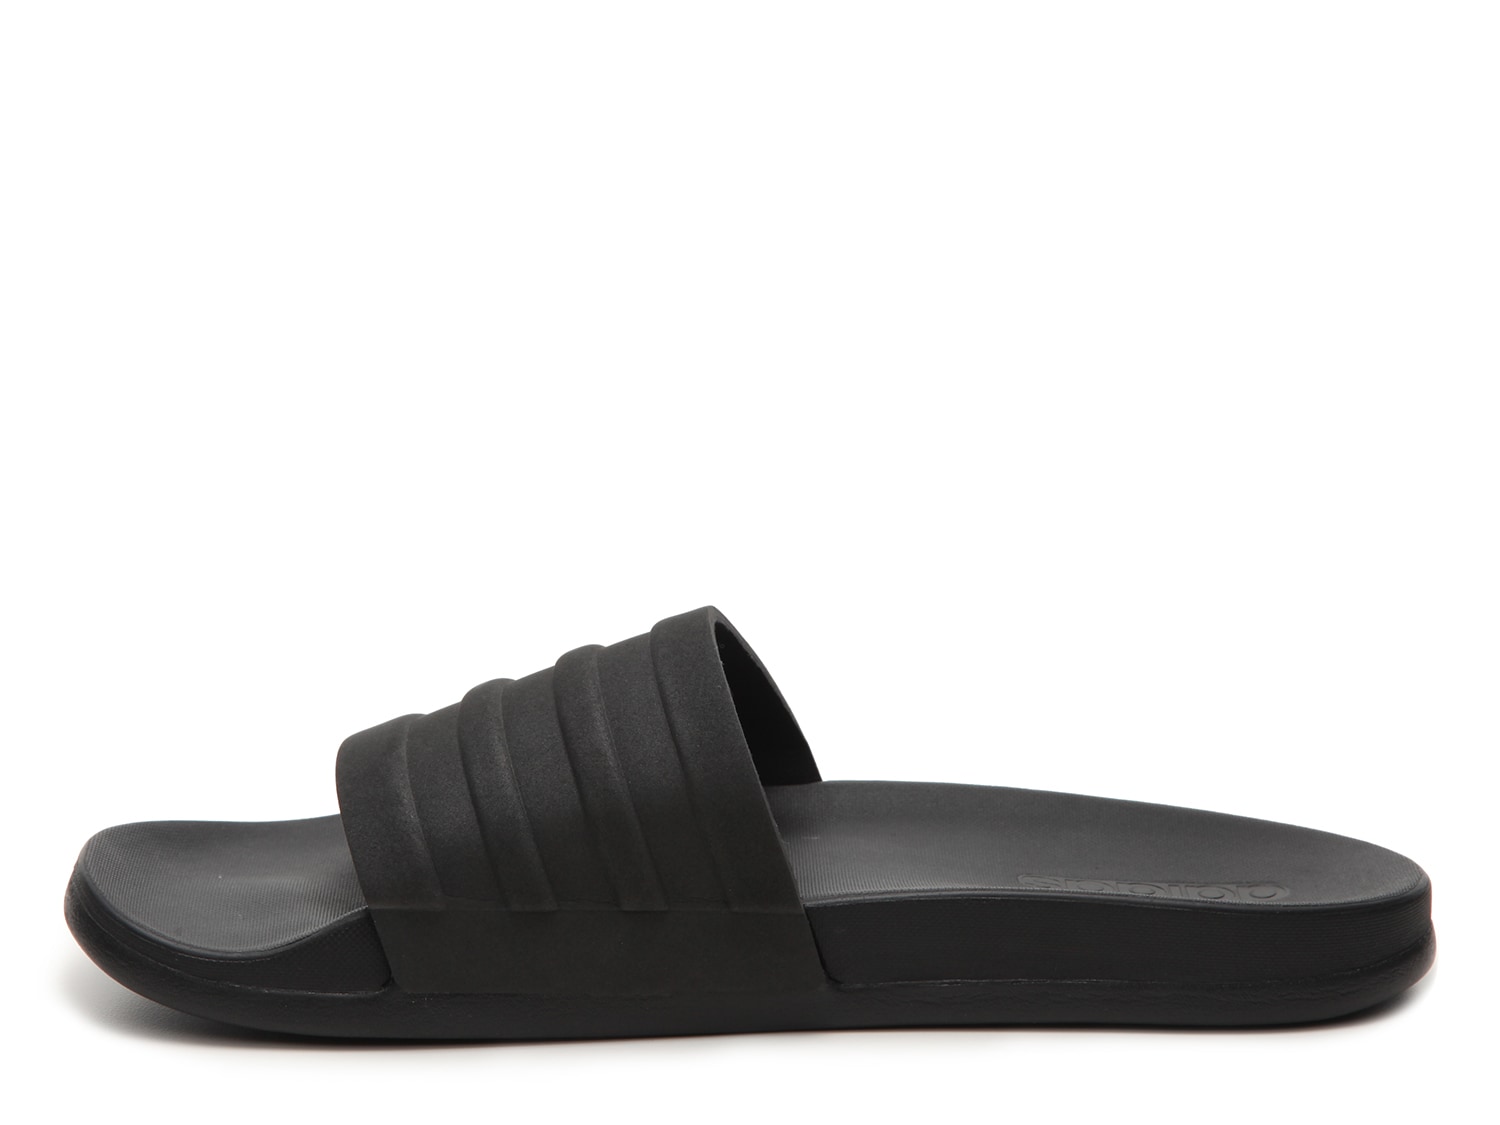 adidas men's cloudfoam sandals